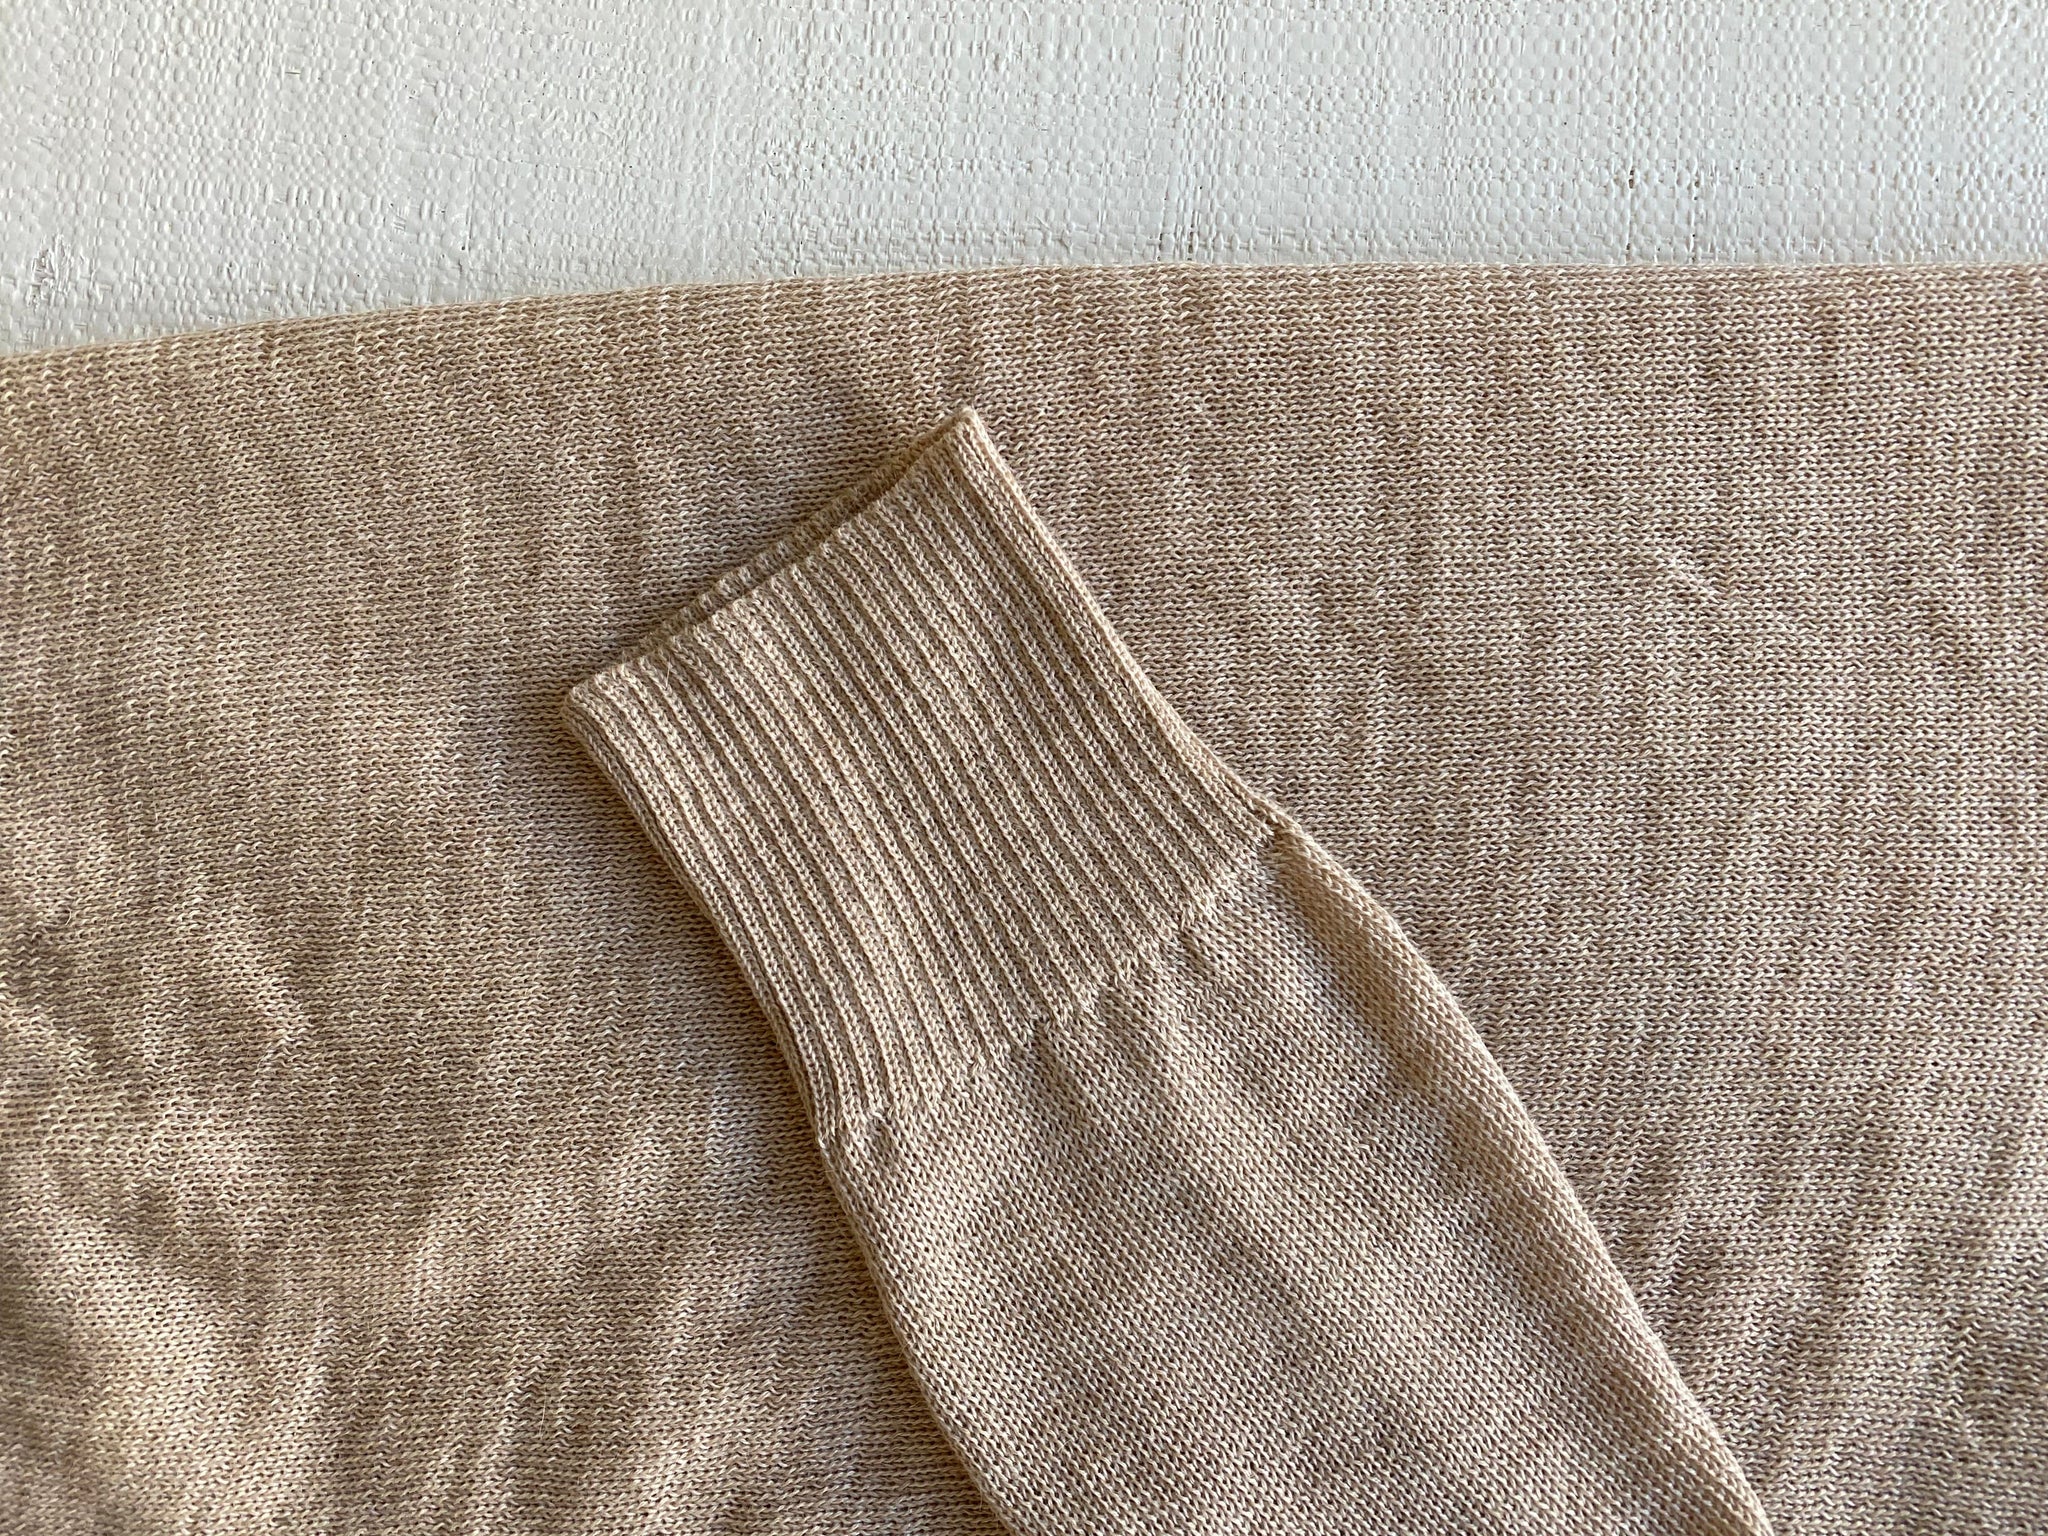 Shore Silk-Blend Sweater - Oat